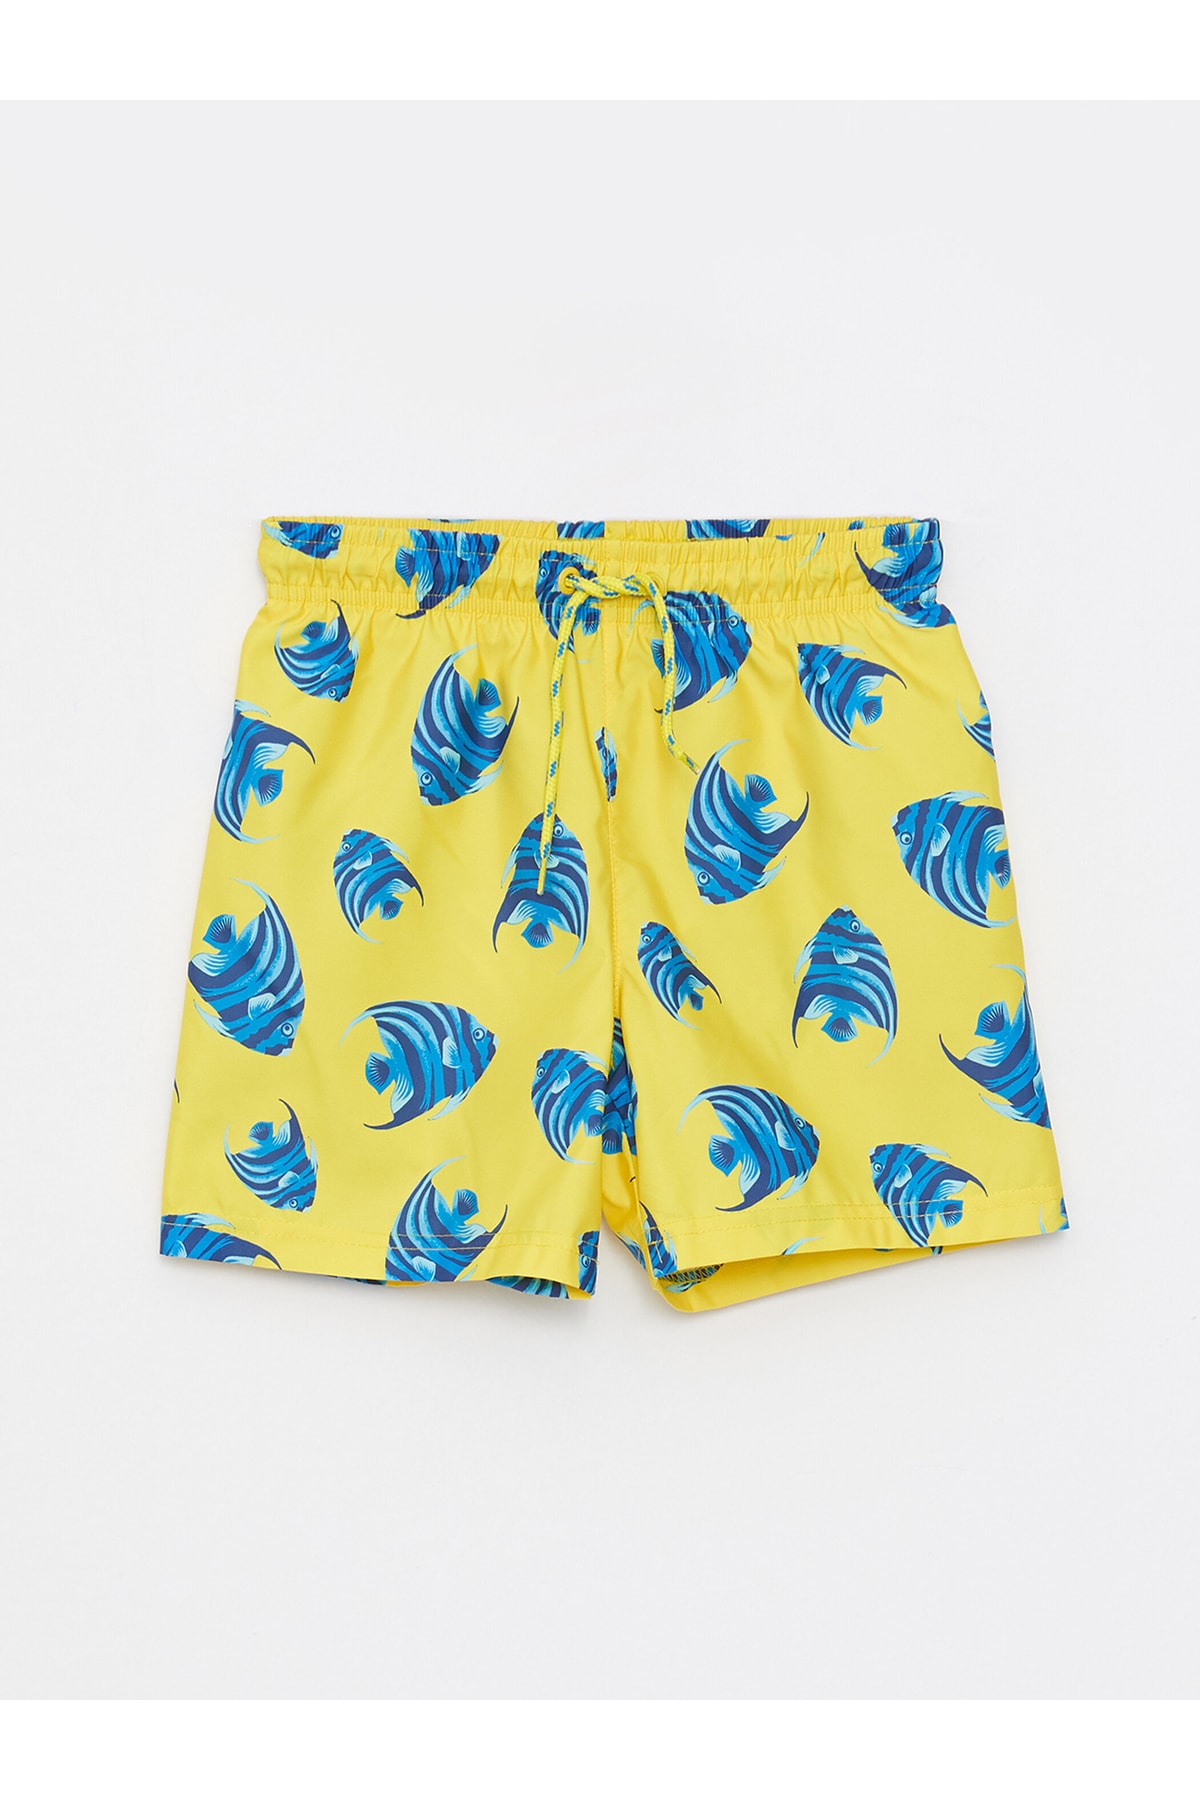 LC Waikiki Printed Quick Drying Boys' Swim Shorts